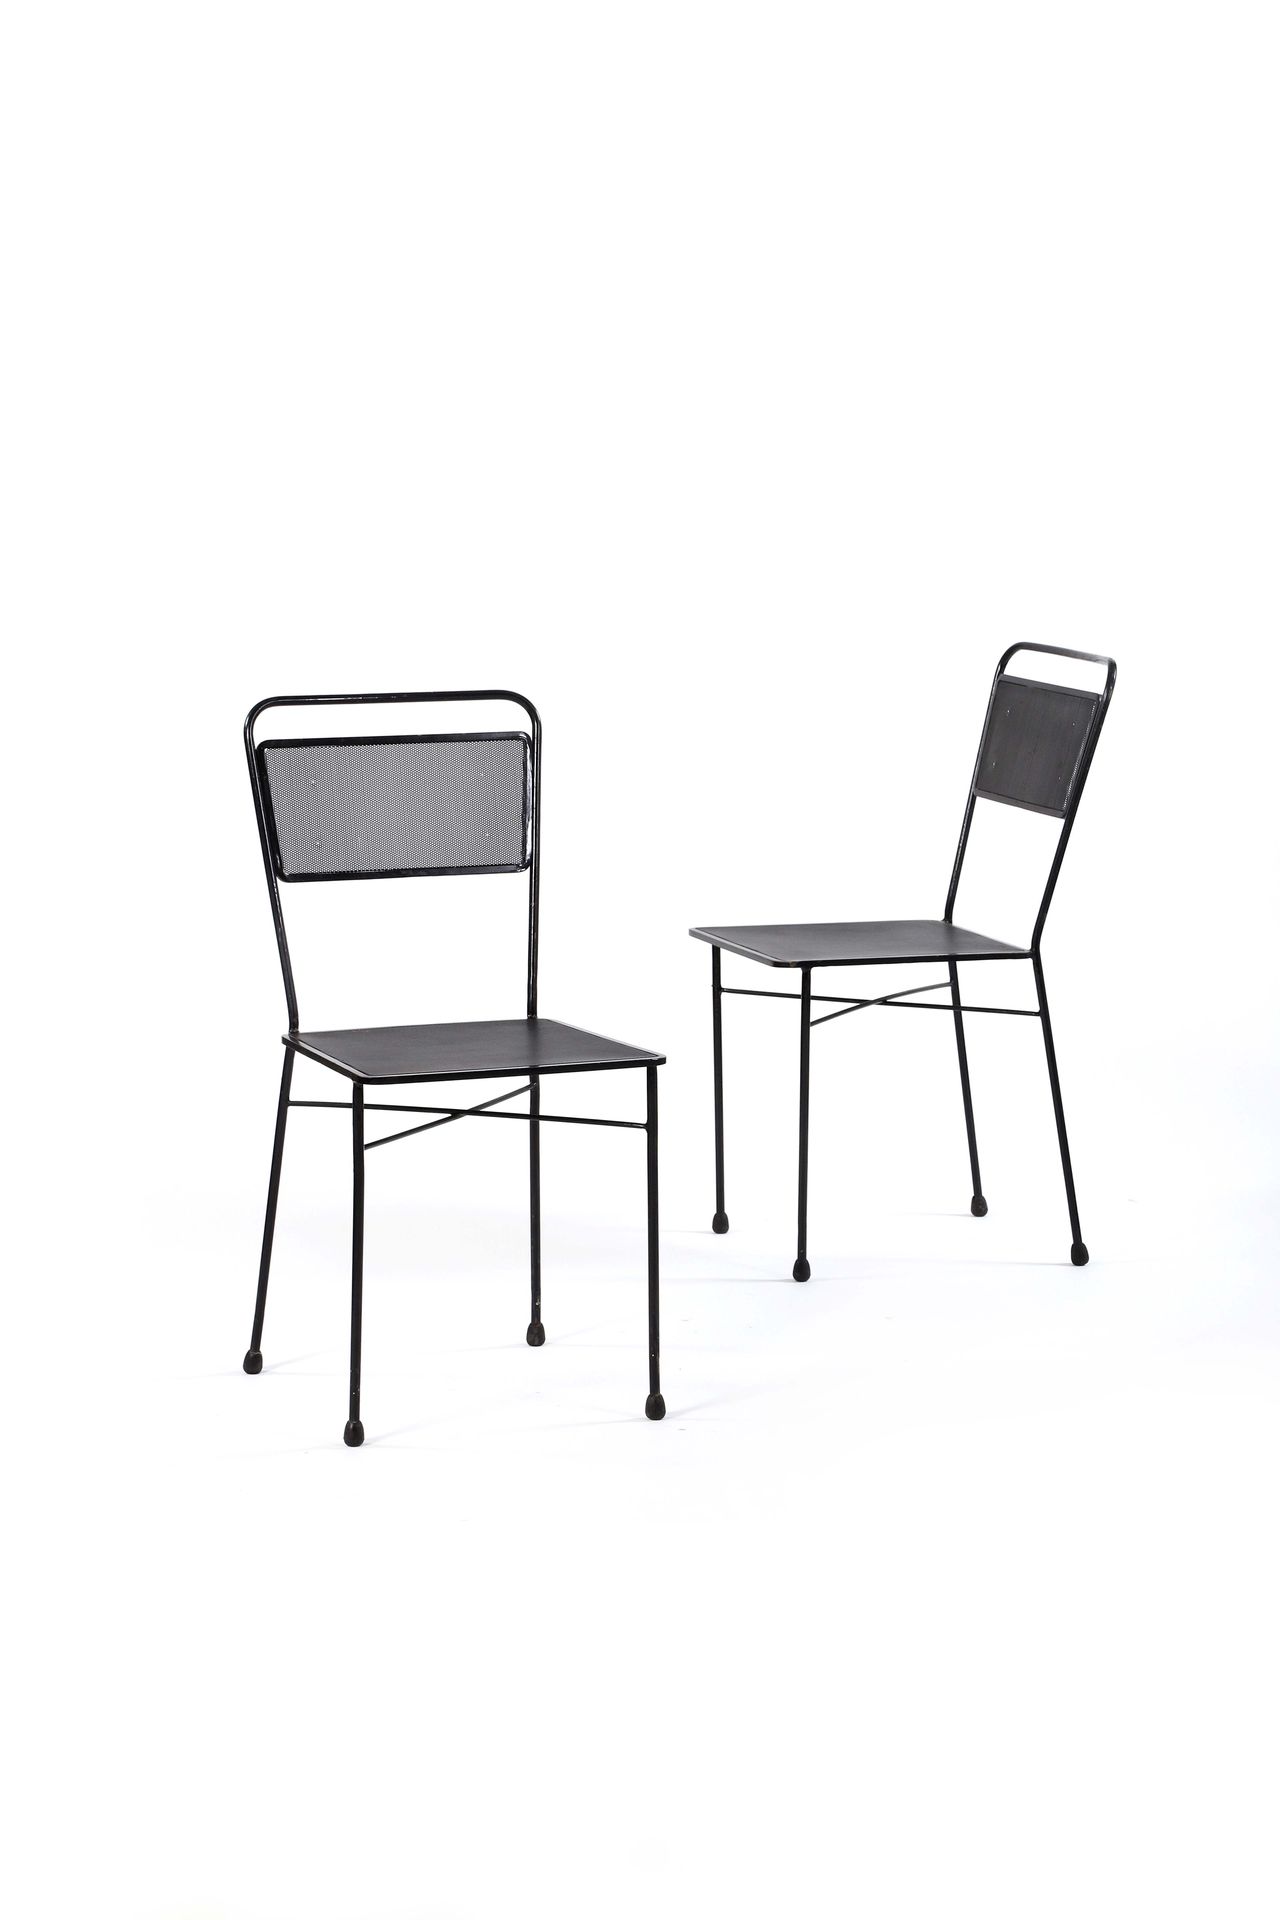 Null 32.

Mathieu MATEGOT

(1910-2001)

Paar von Stühlen

Perforiertes Blech

79&hellip;